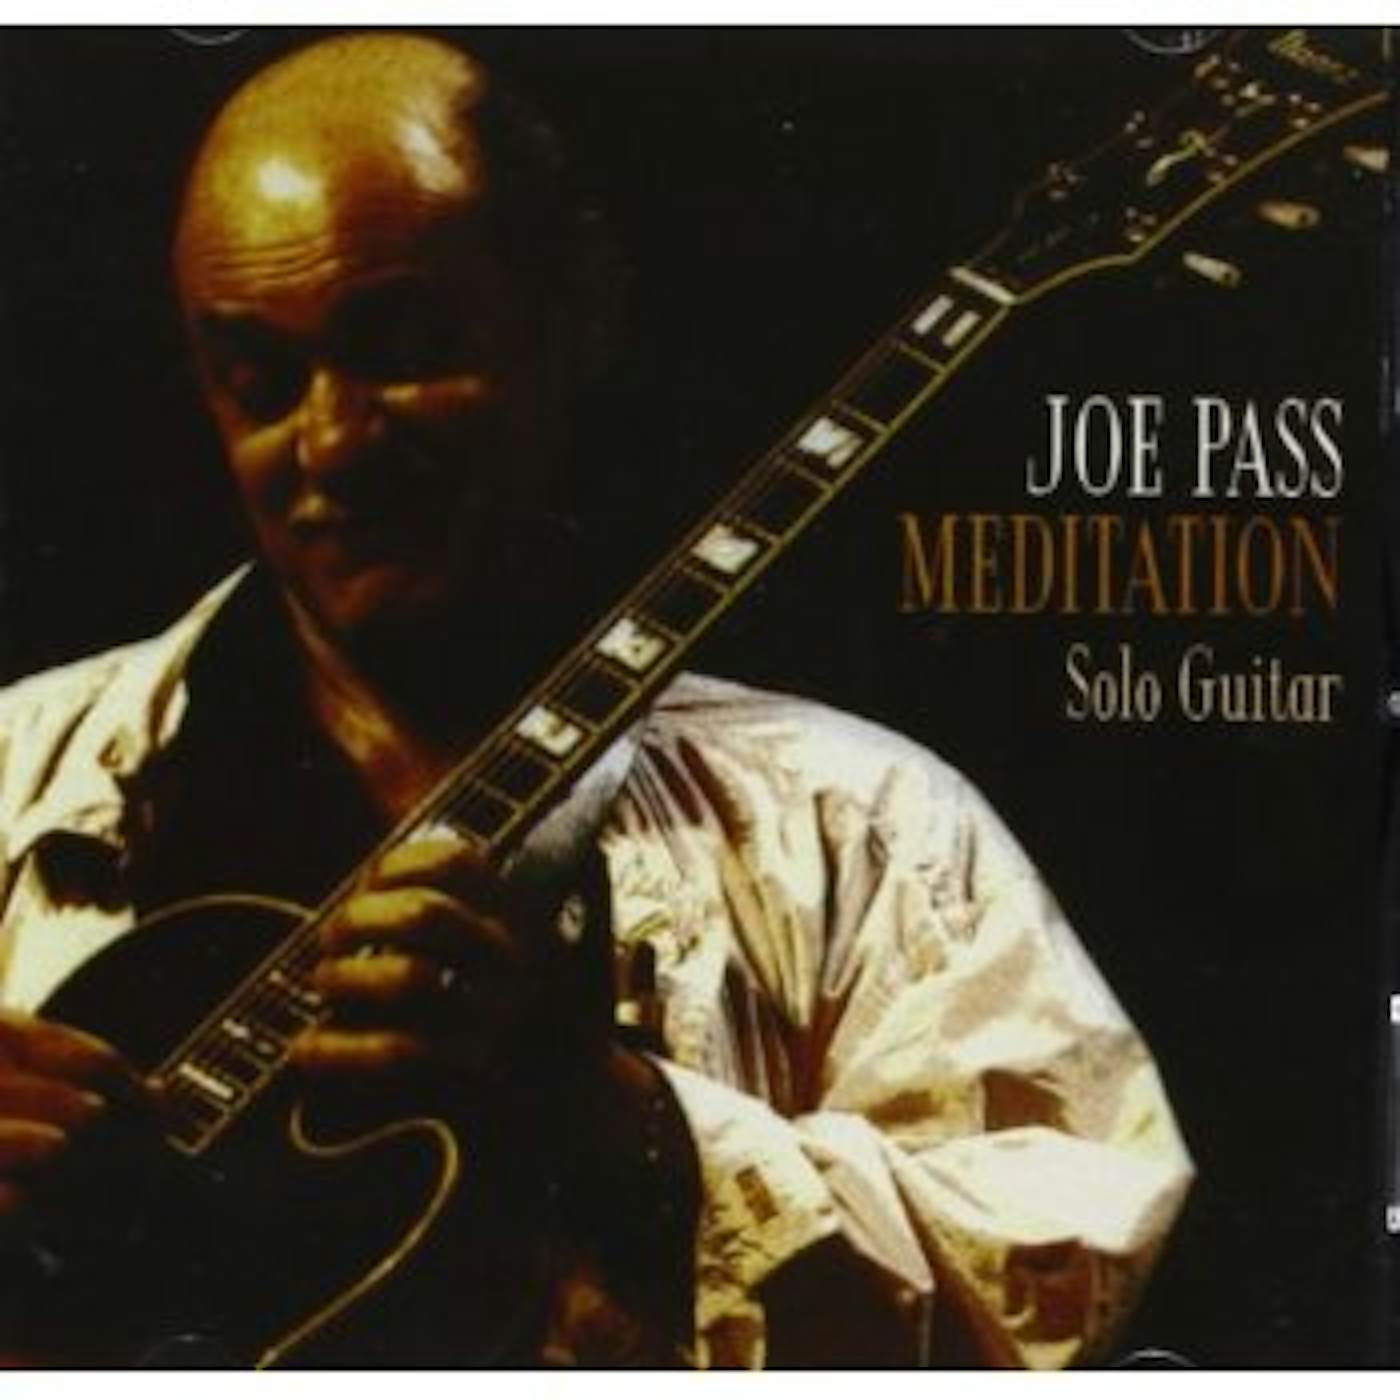 Joe Pass MEDITATION CD